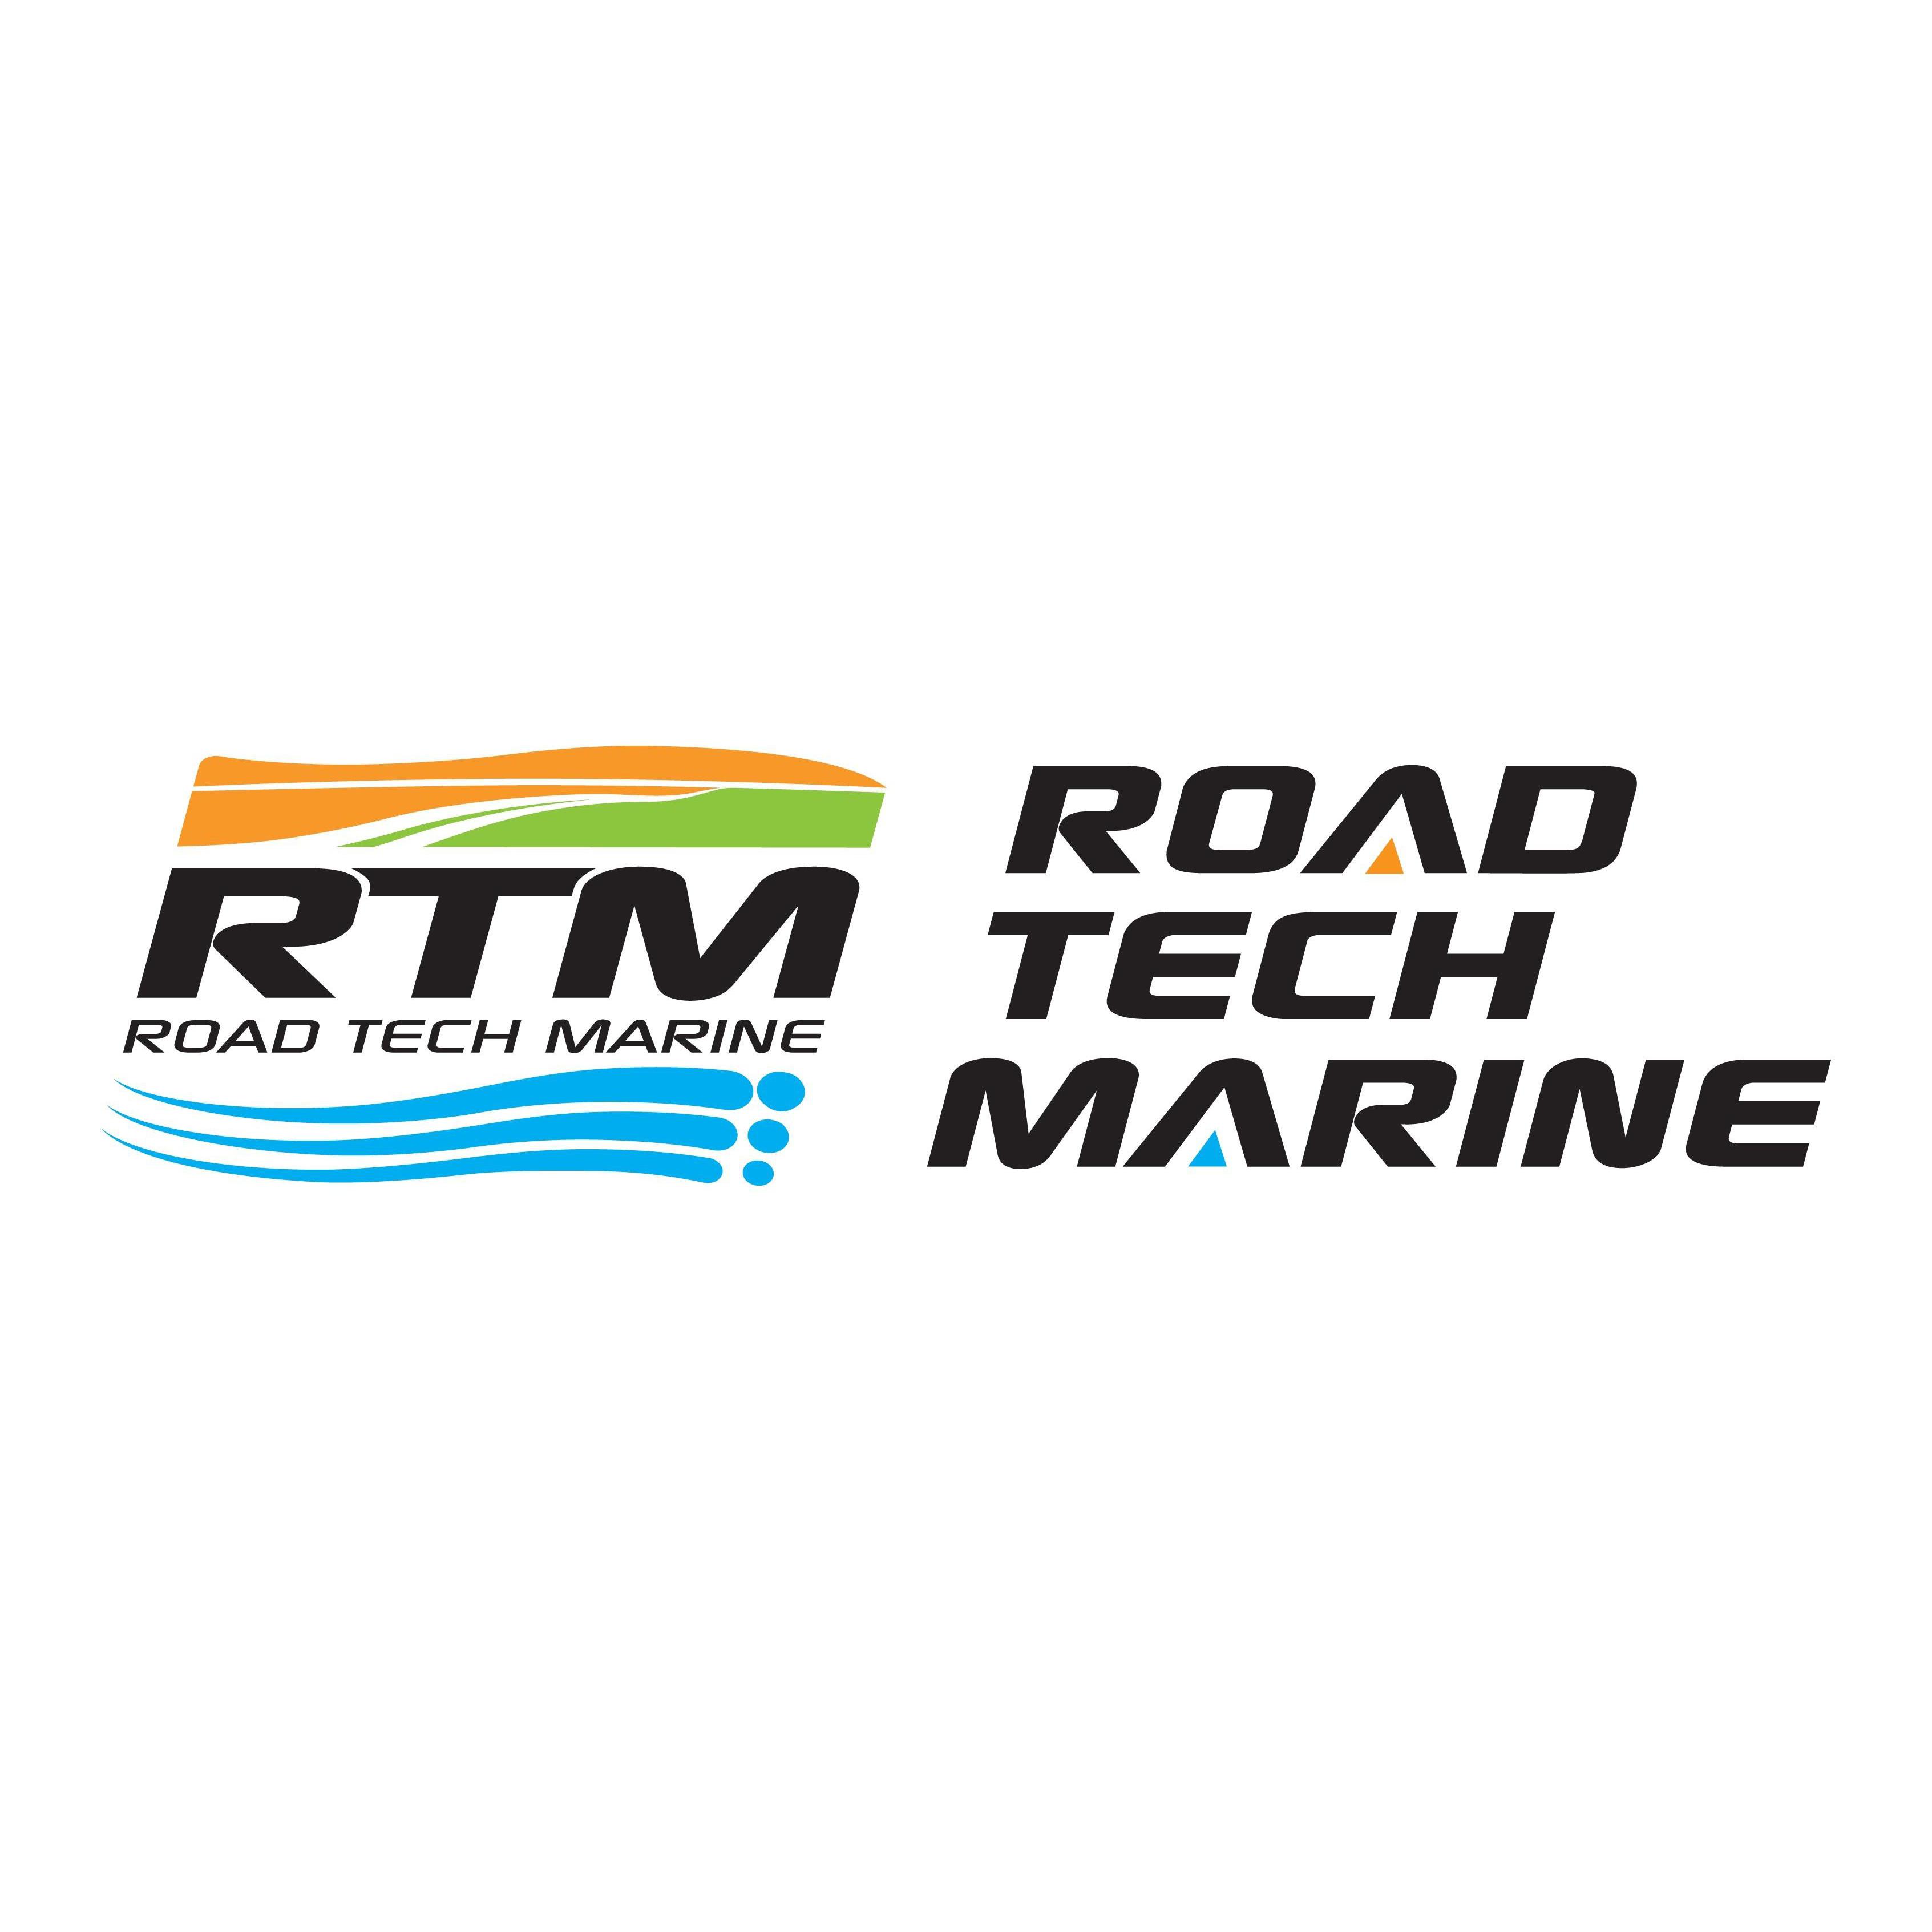 RTM - Road Tech Marine Mandurah - Mandurah, WA 6210 - (08) 9555 9363 | ShowMeLocal.com